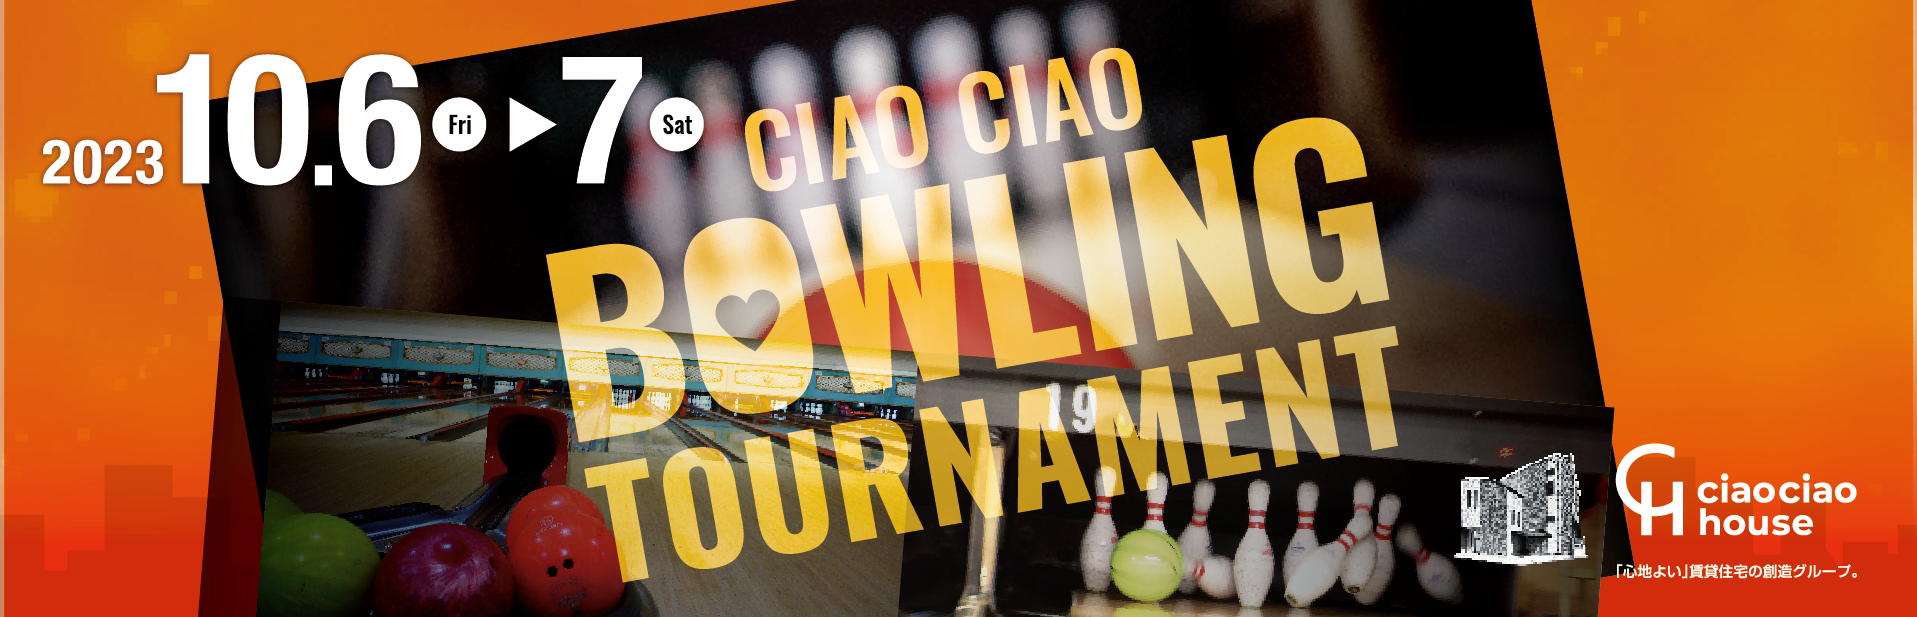 ciao ciao bowling tournament 2023